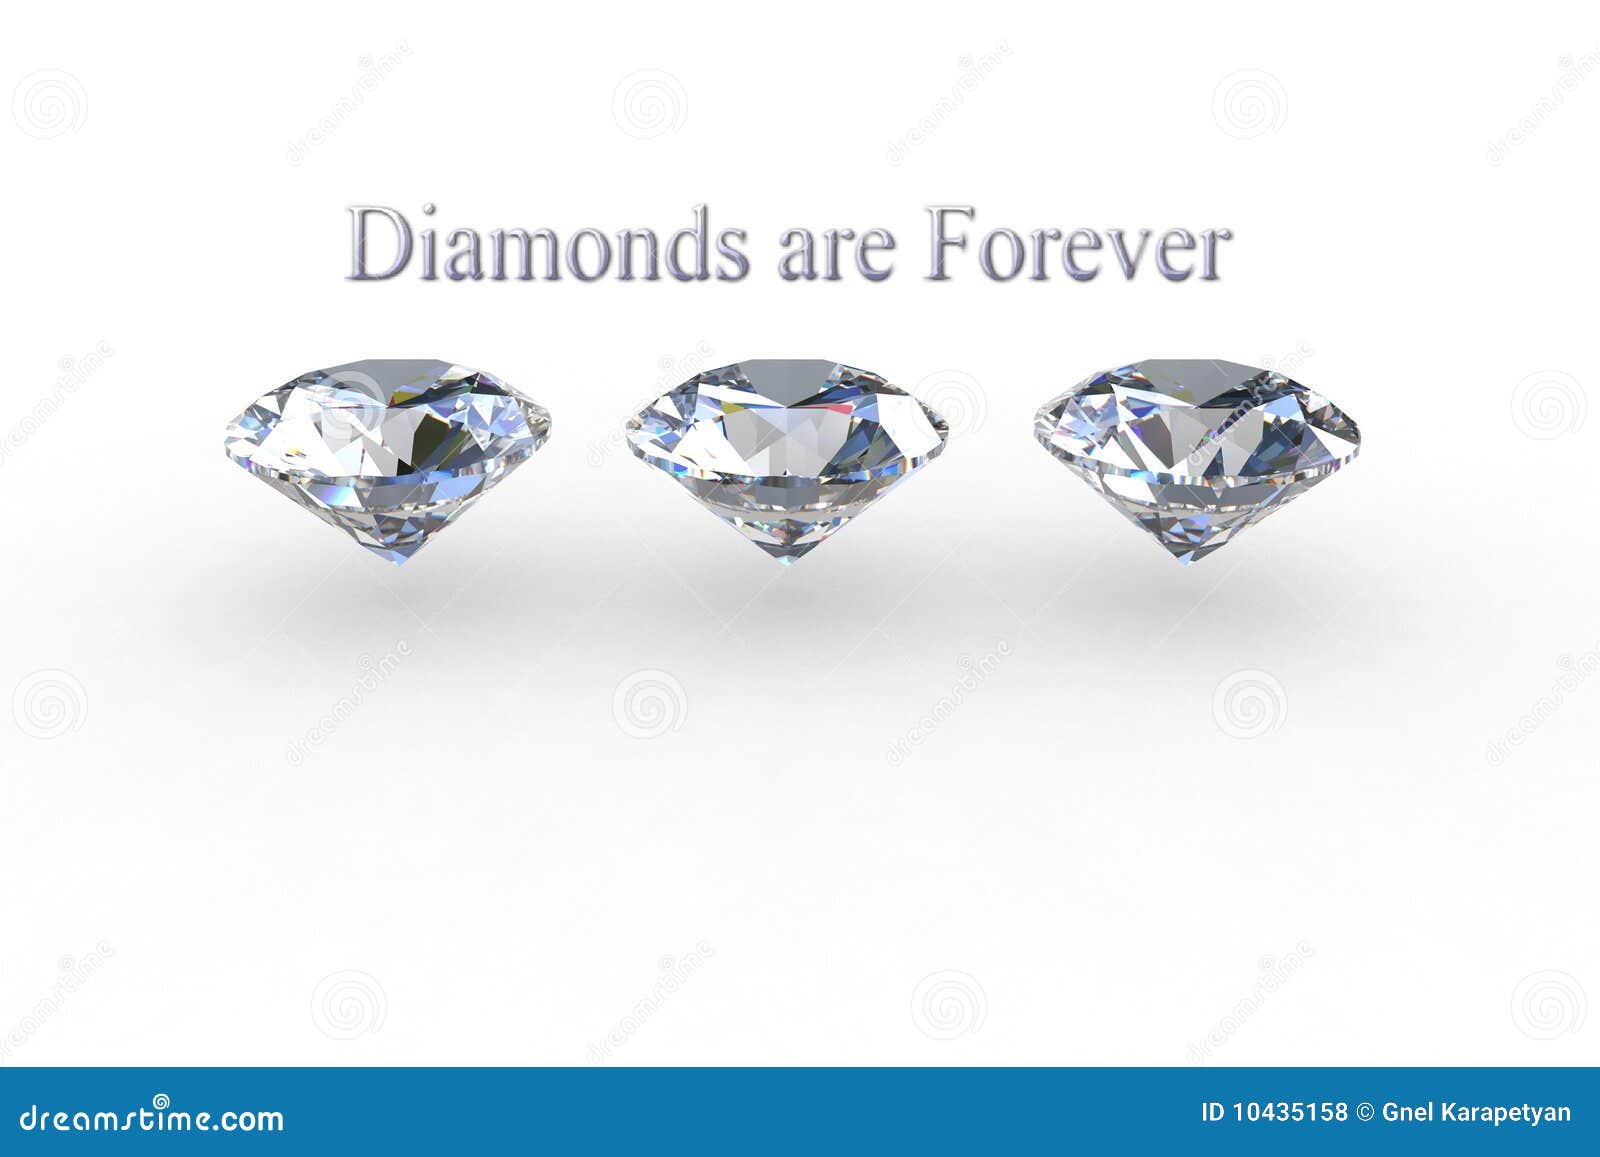 diamonds are forever - set of three diamond gems